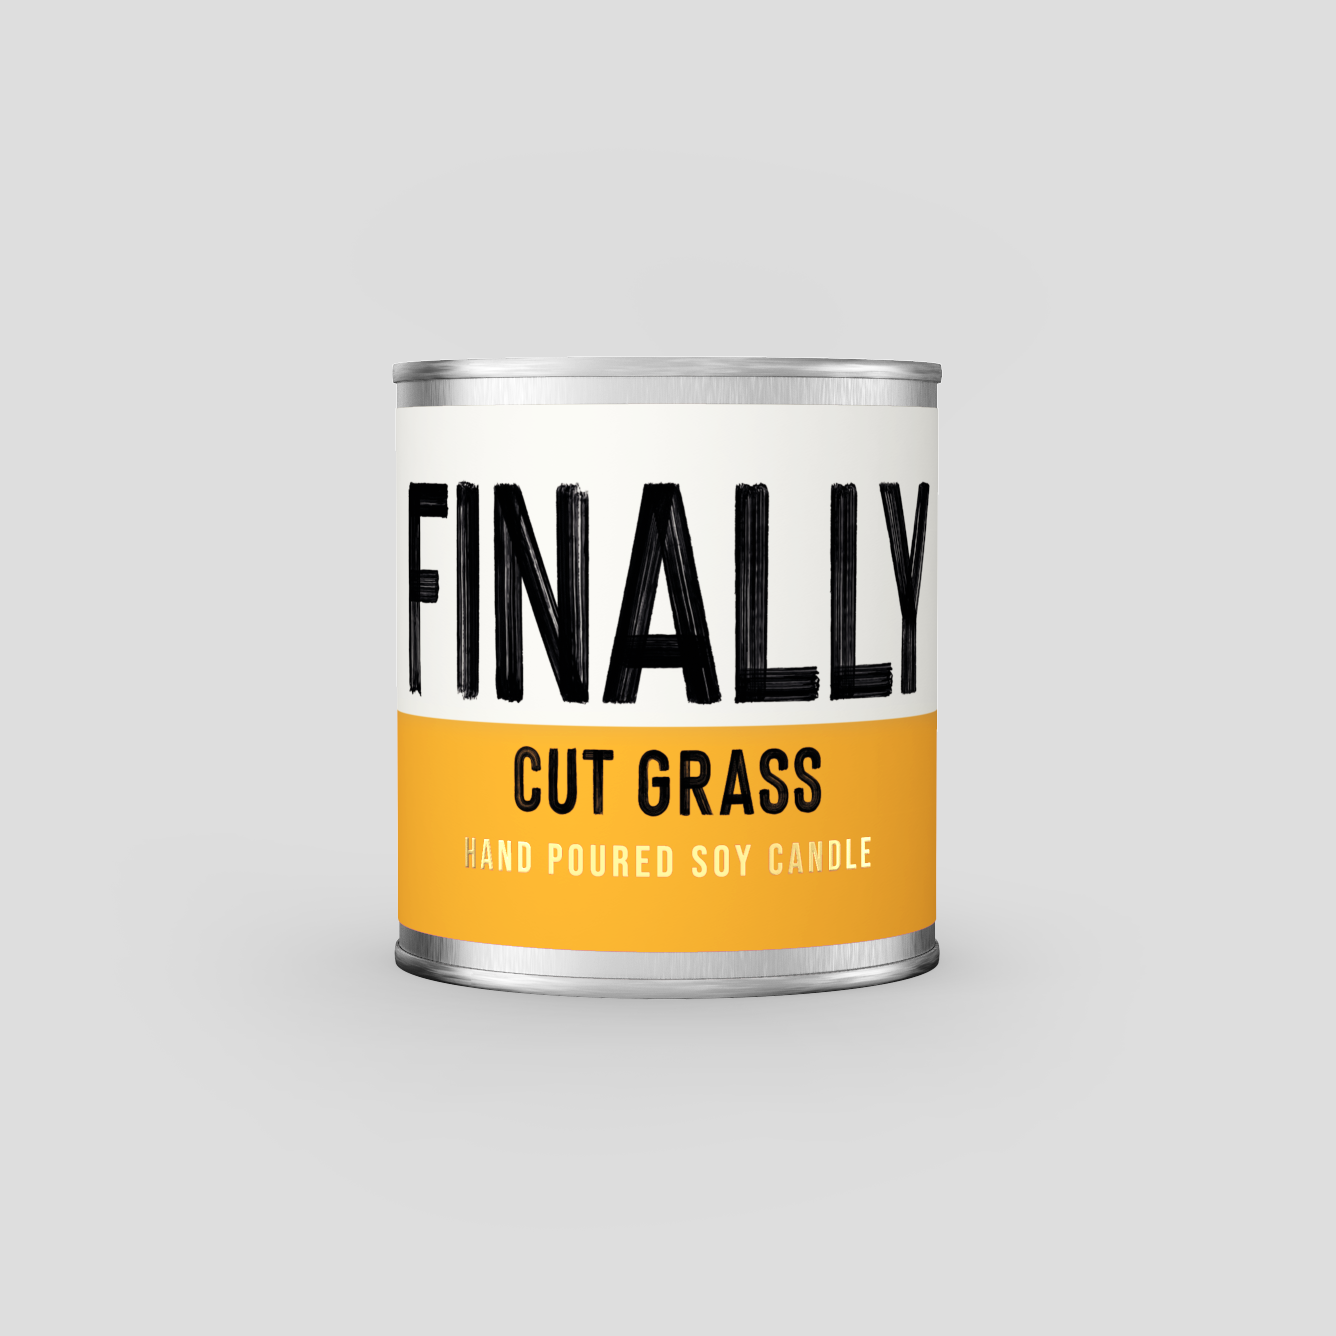 Finally Cut Grass - Cut grass scented candle